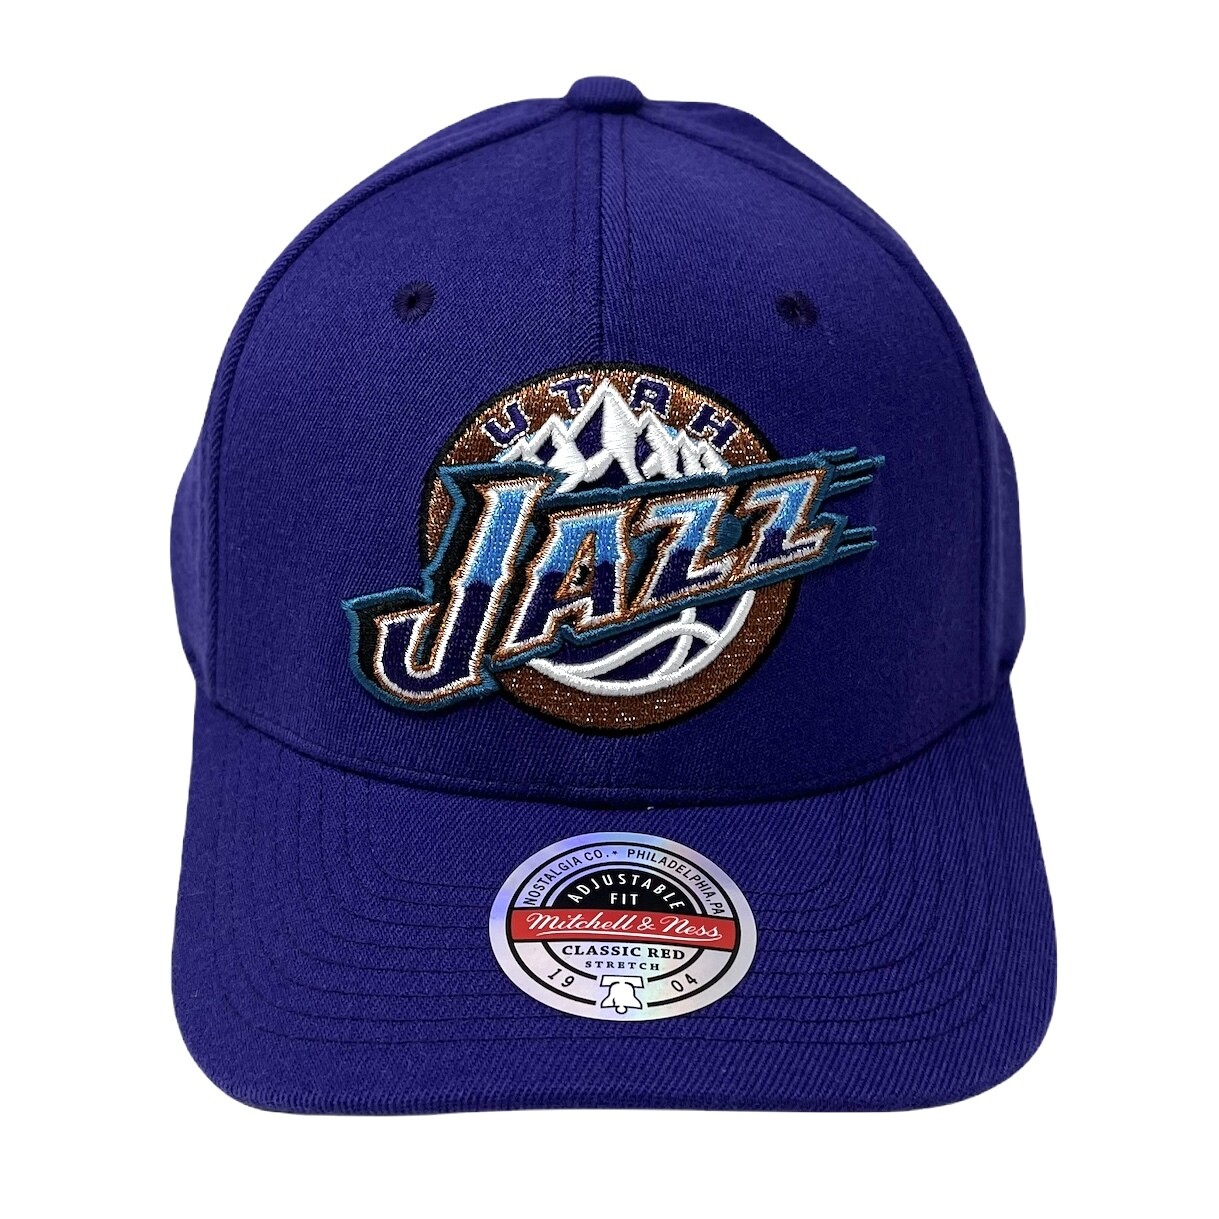 Utah Jazz Men's NBA Team 2 Tone Snapback Hat